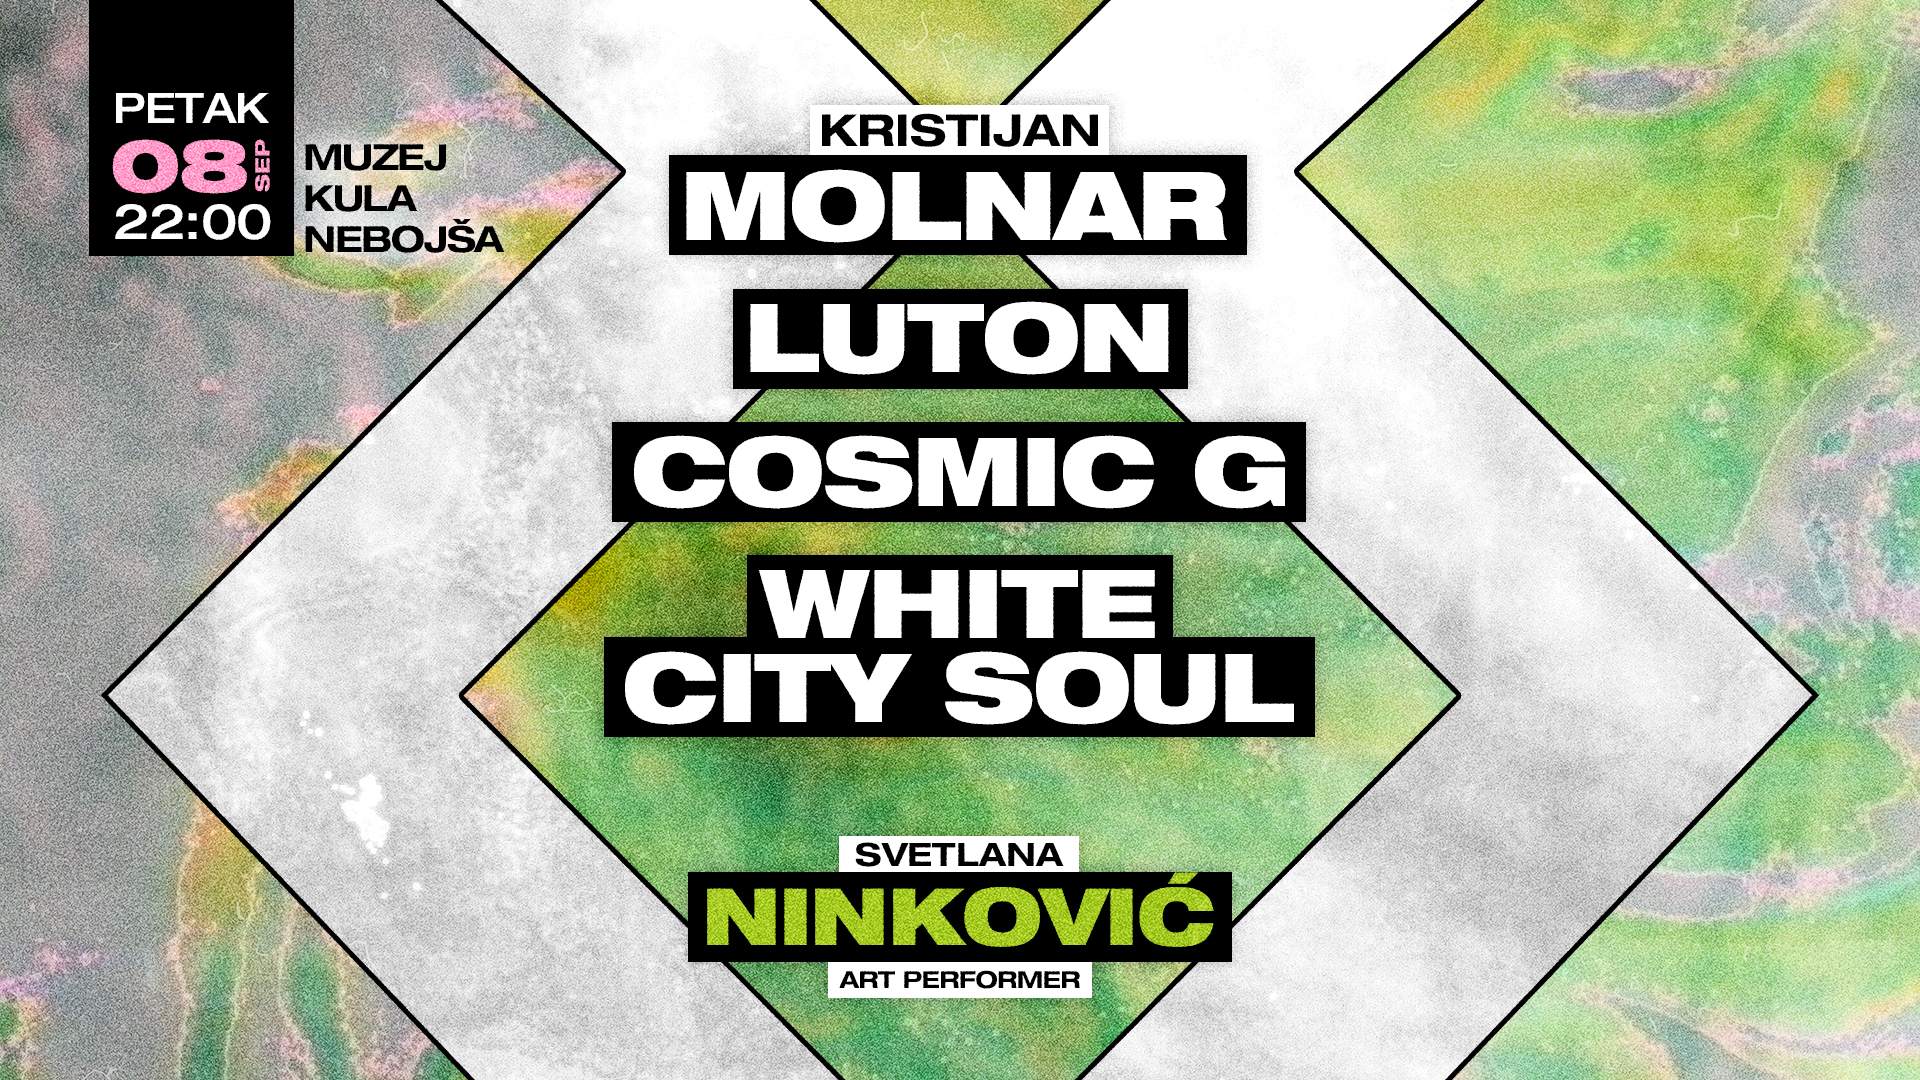 Ritmik Opening with Kristijan Molnar, Luton, Cosmic G, White City Soul, Svetlana Ninković - フライヤー表